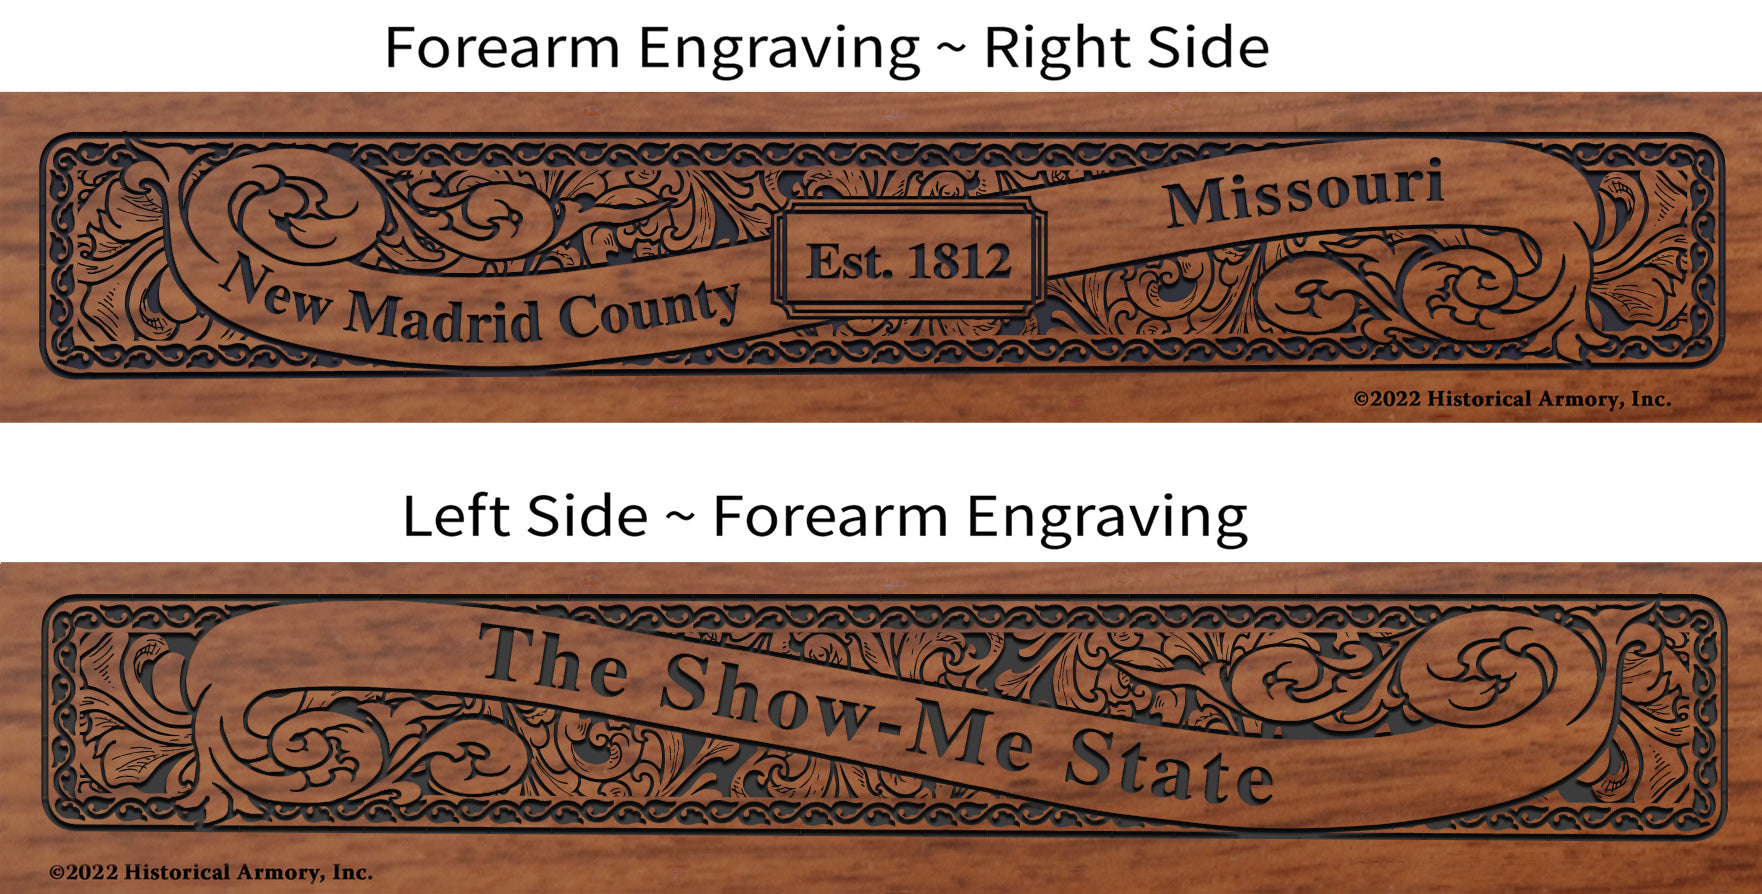 New Madrid County Missouri Engraved Rifle Forearm